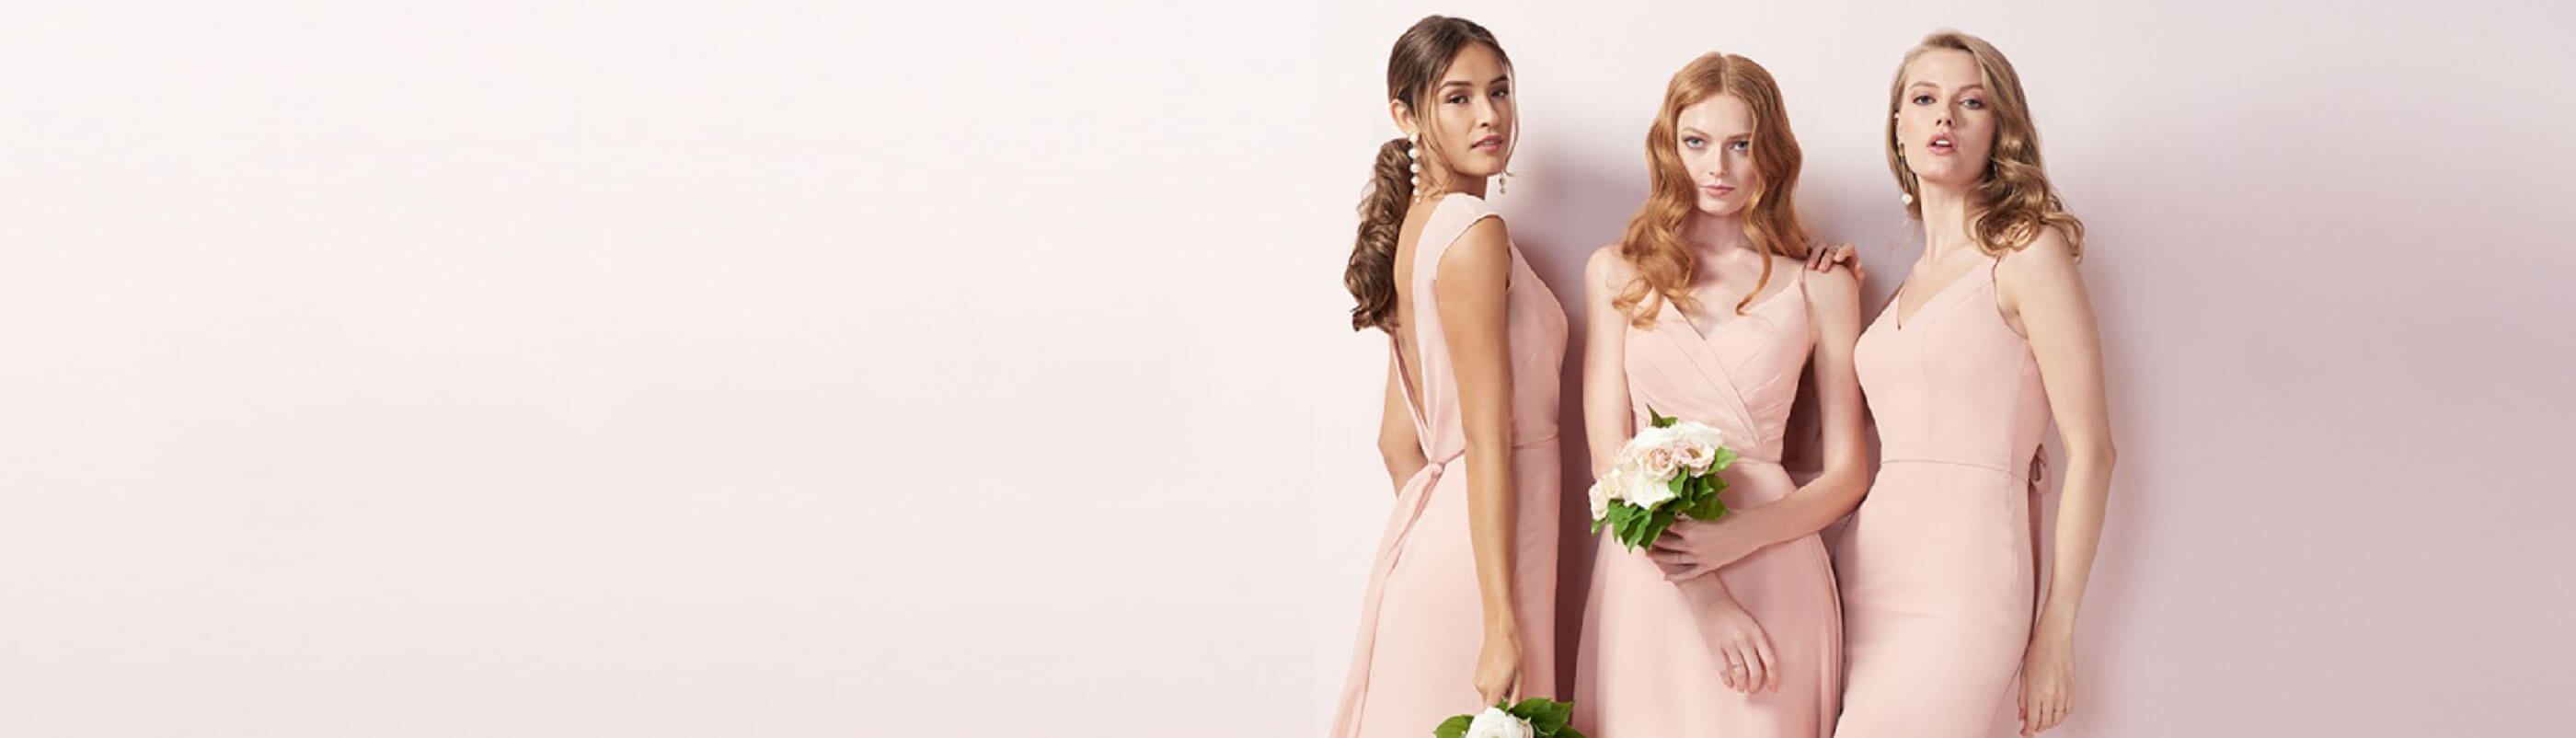 Models wearing pink dresses